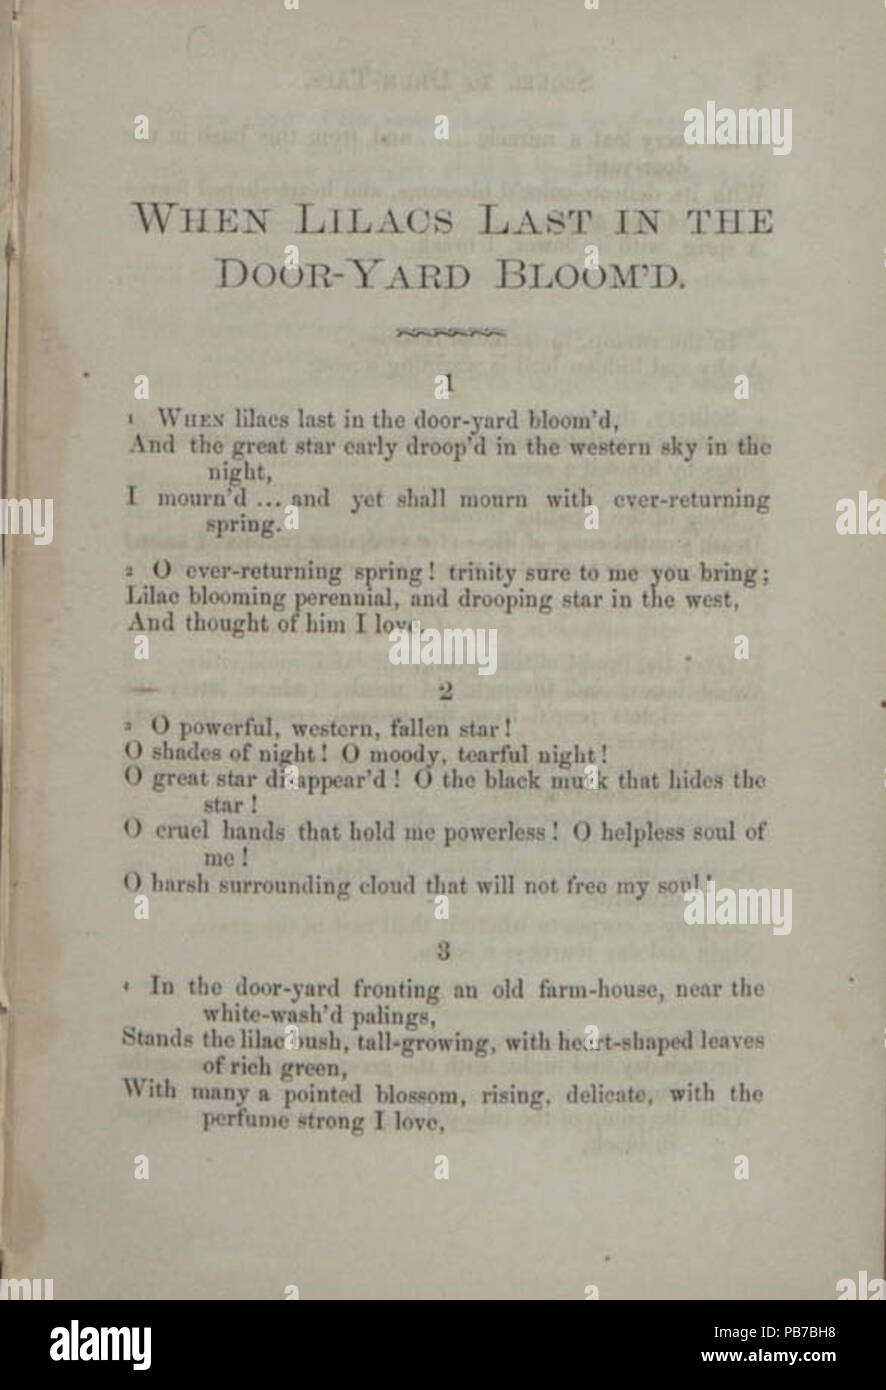 1852 Whitman poesia quando lillã ultimo in Dooryard Bloom'd Sequel pagina 3 Foto Stock